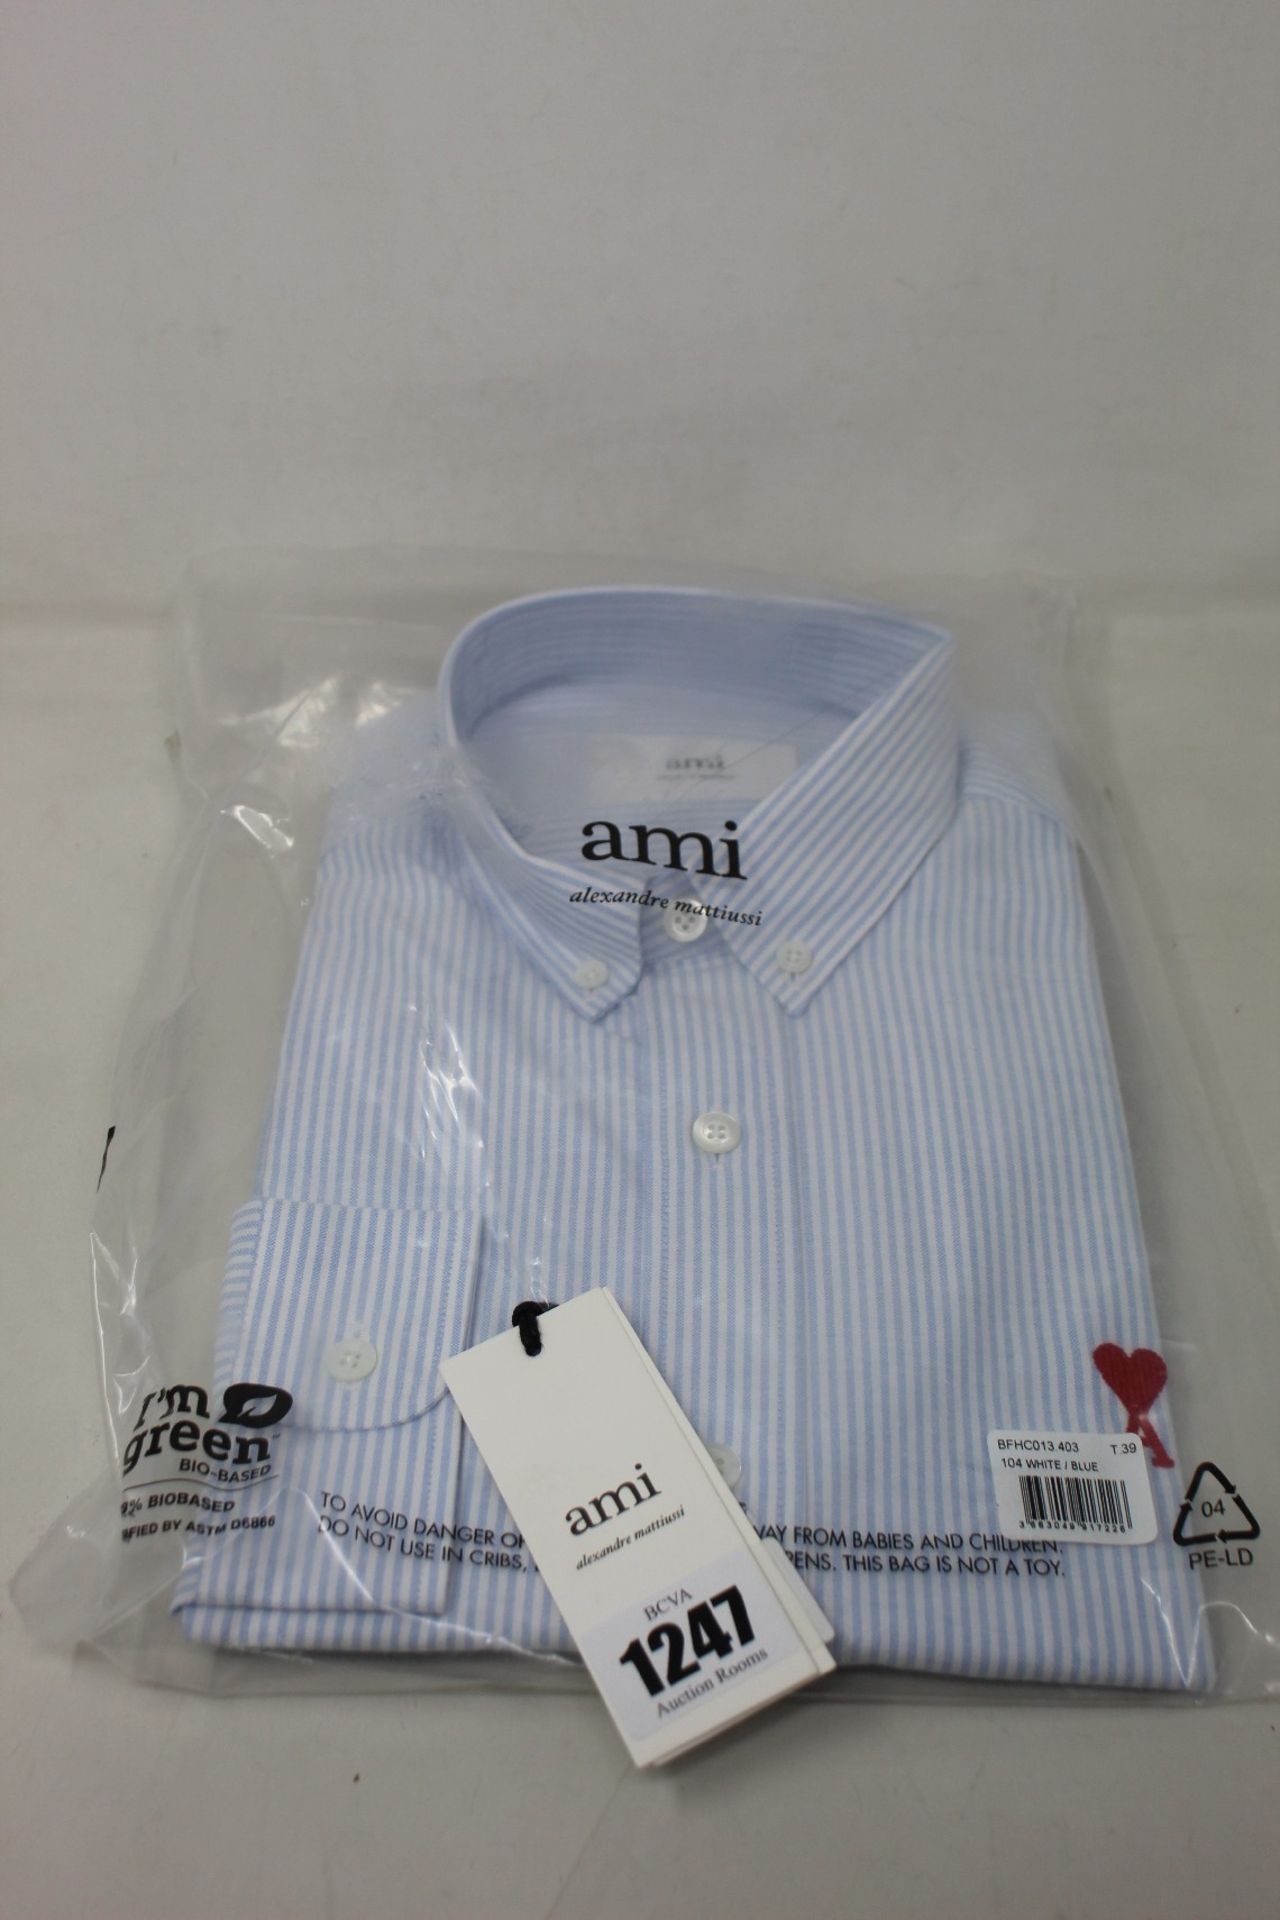 An as new Alexandre Mattiussi Ami shirt in blue/white (T39 - RRP £170).